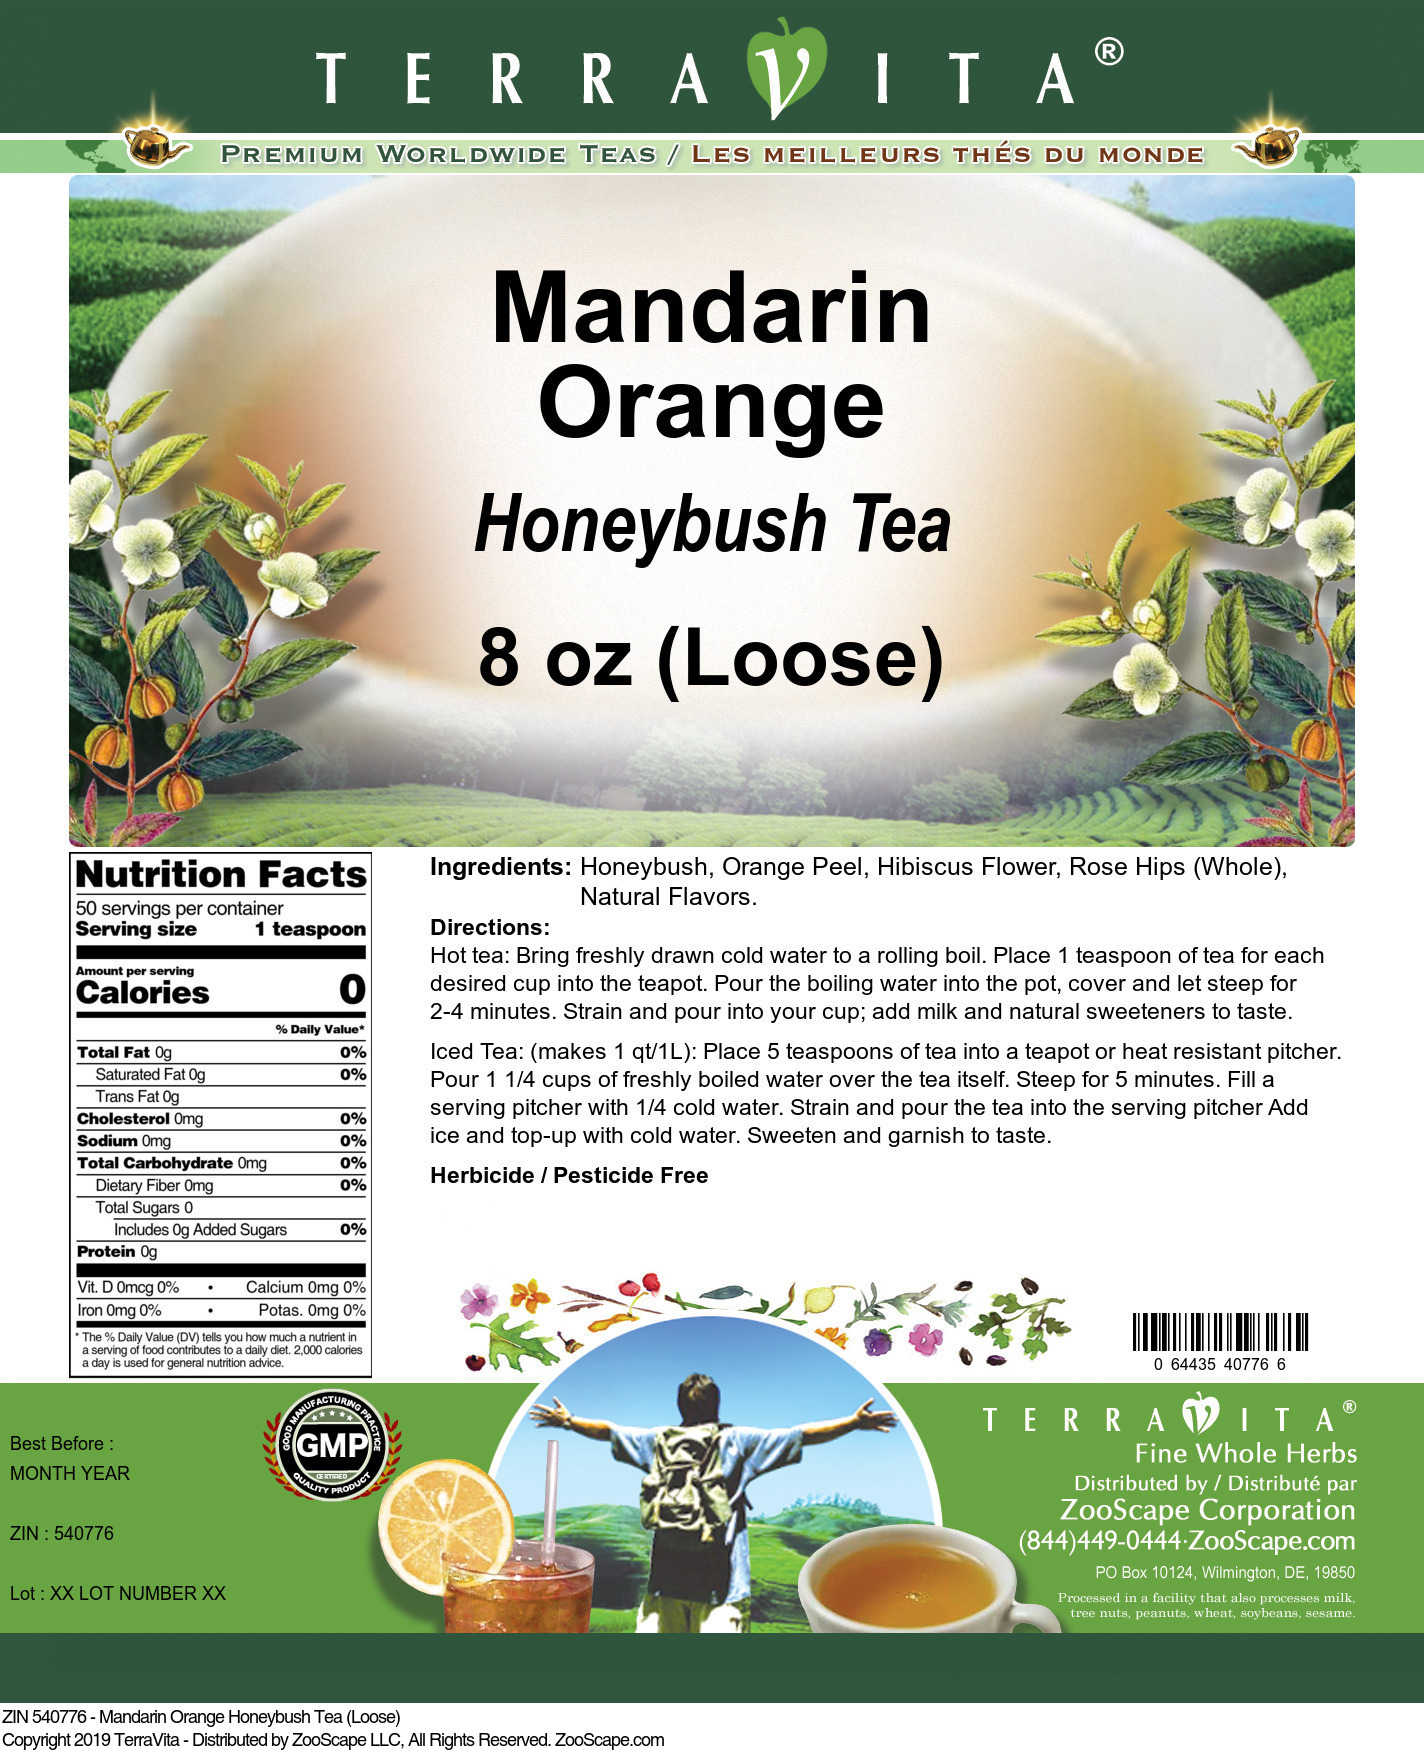 Mandarin Orange Honeybush Tea (Loose) - Label